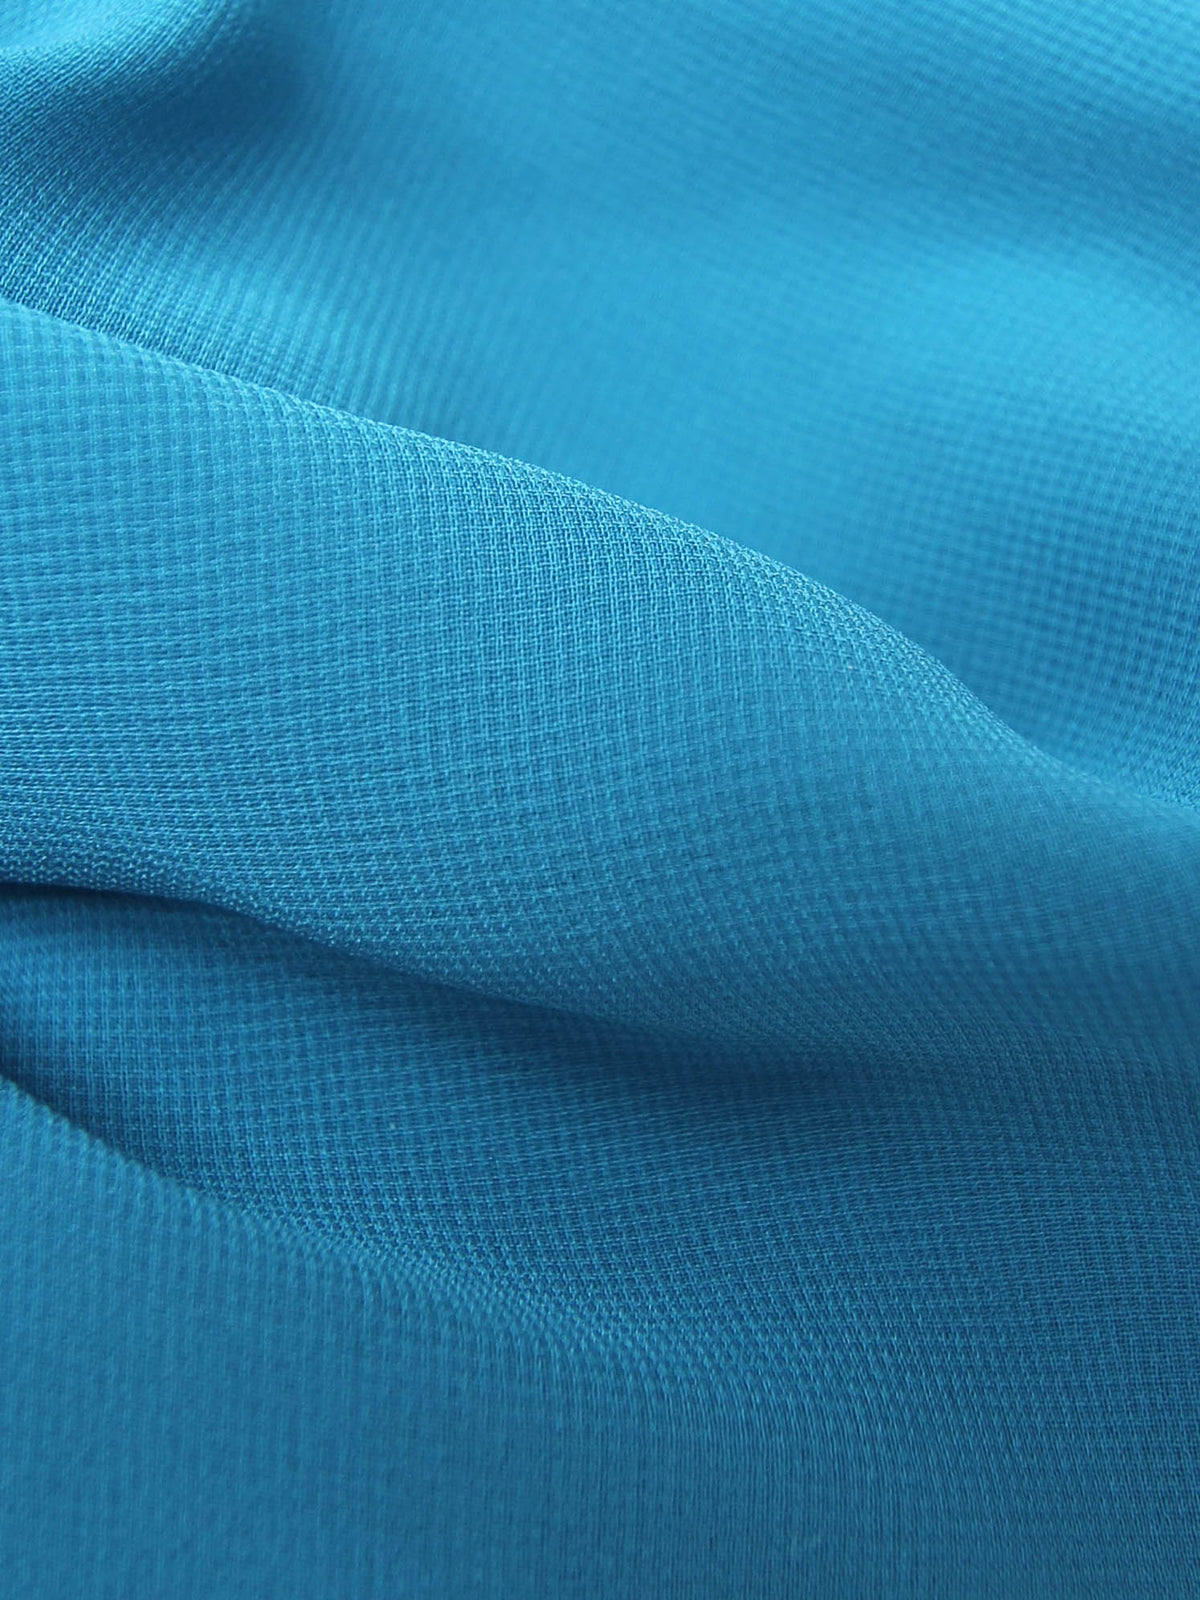 Tissu Mousseline de Polyester Bleu Sarcelle - Serendipity